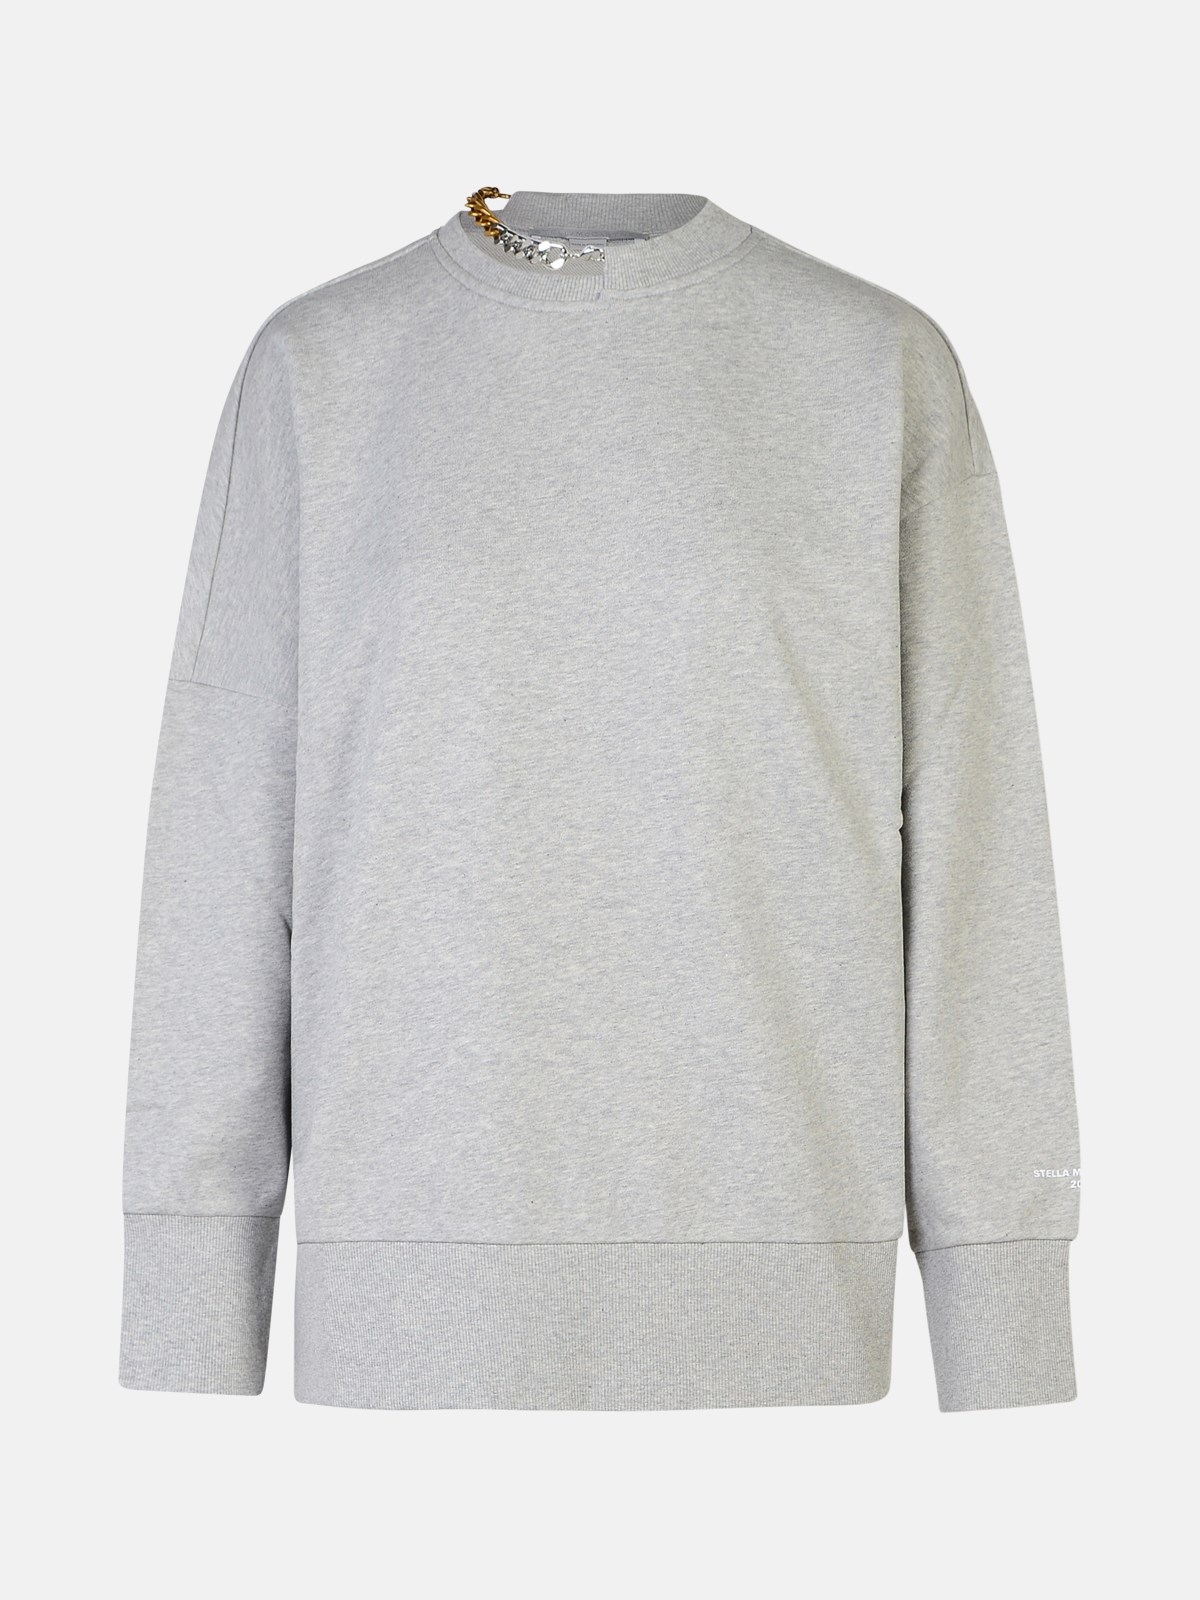 Stella Mccartney '' Grey Cotton Sweatshirt